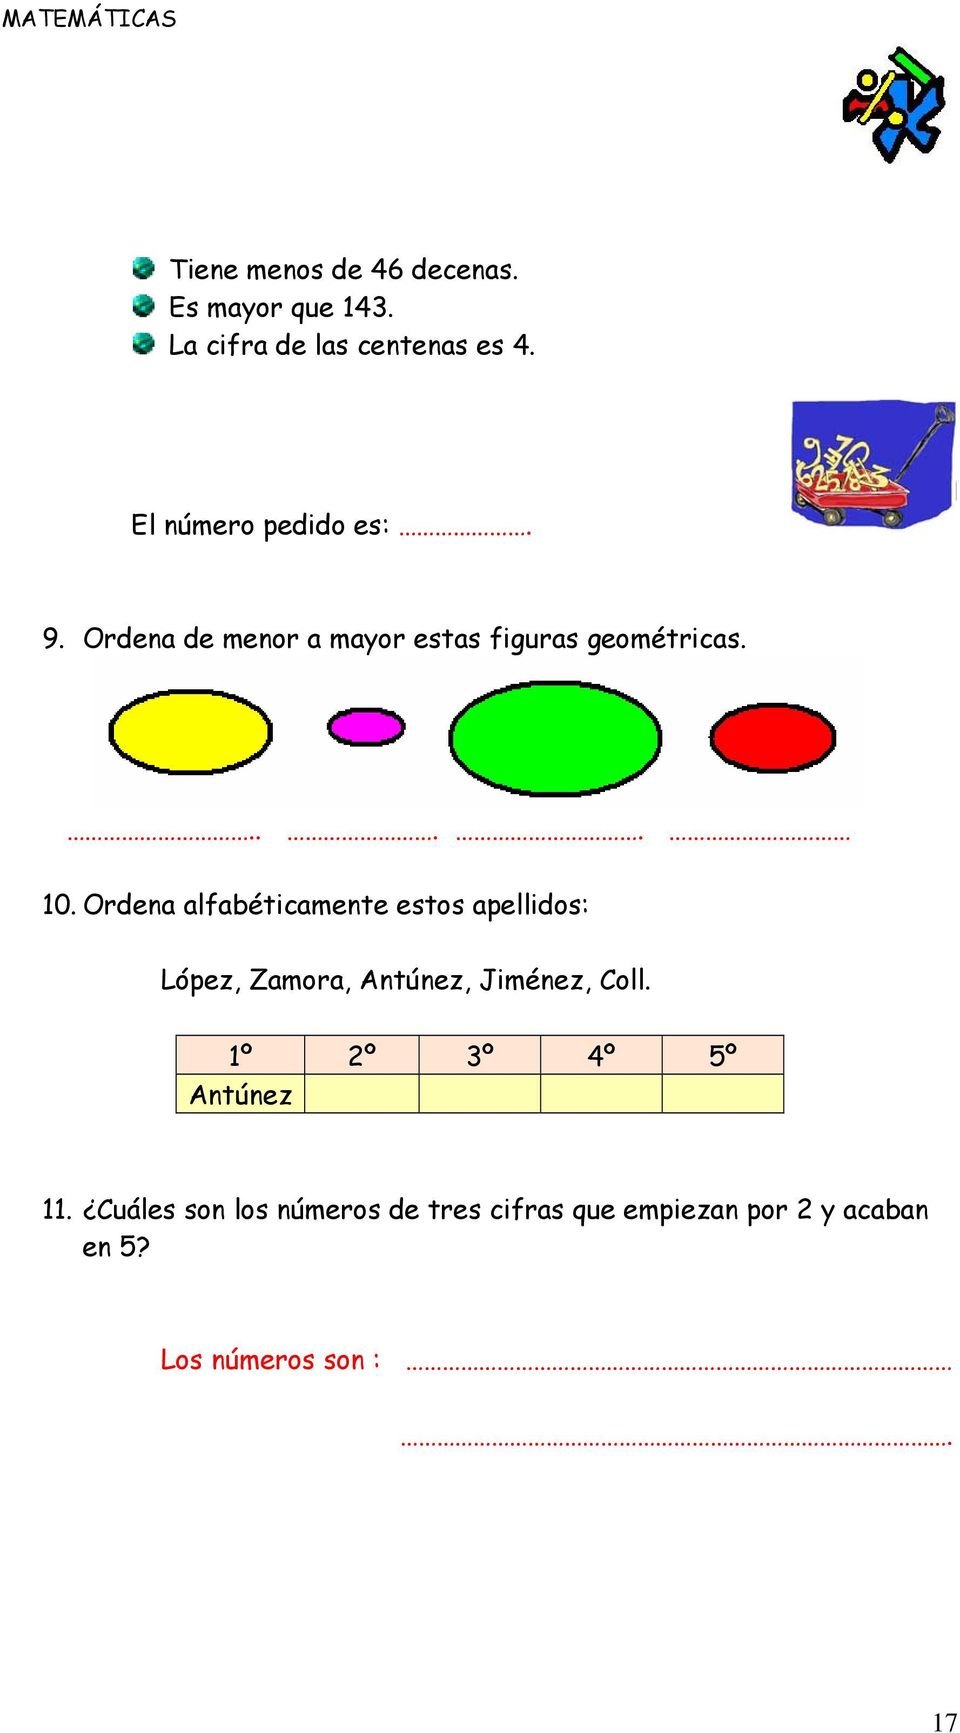 Ordena alfabéticamente estos apellidos: López, Zamora, Antúnez, Jiménez, Coll.